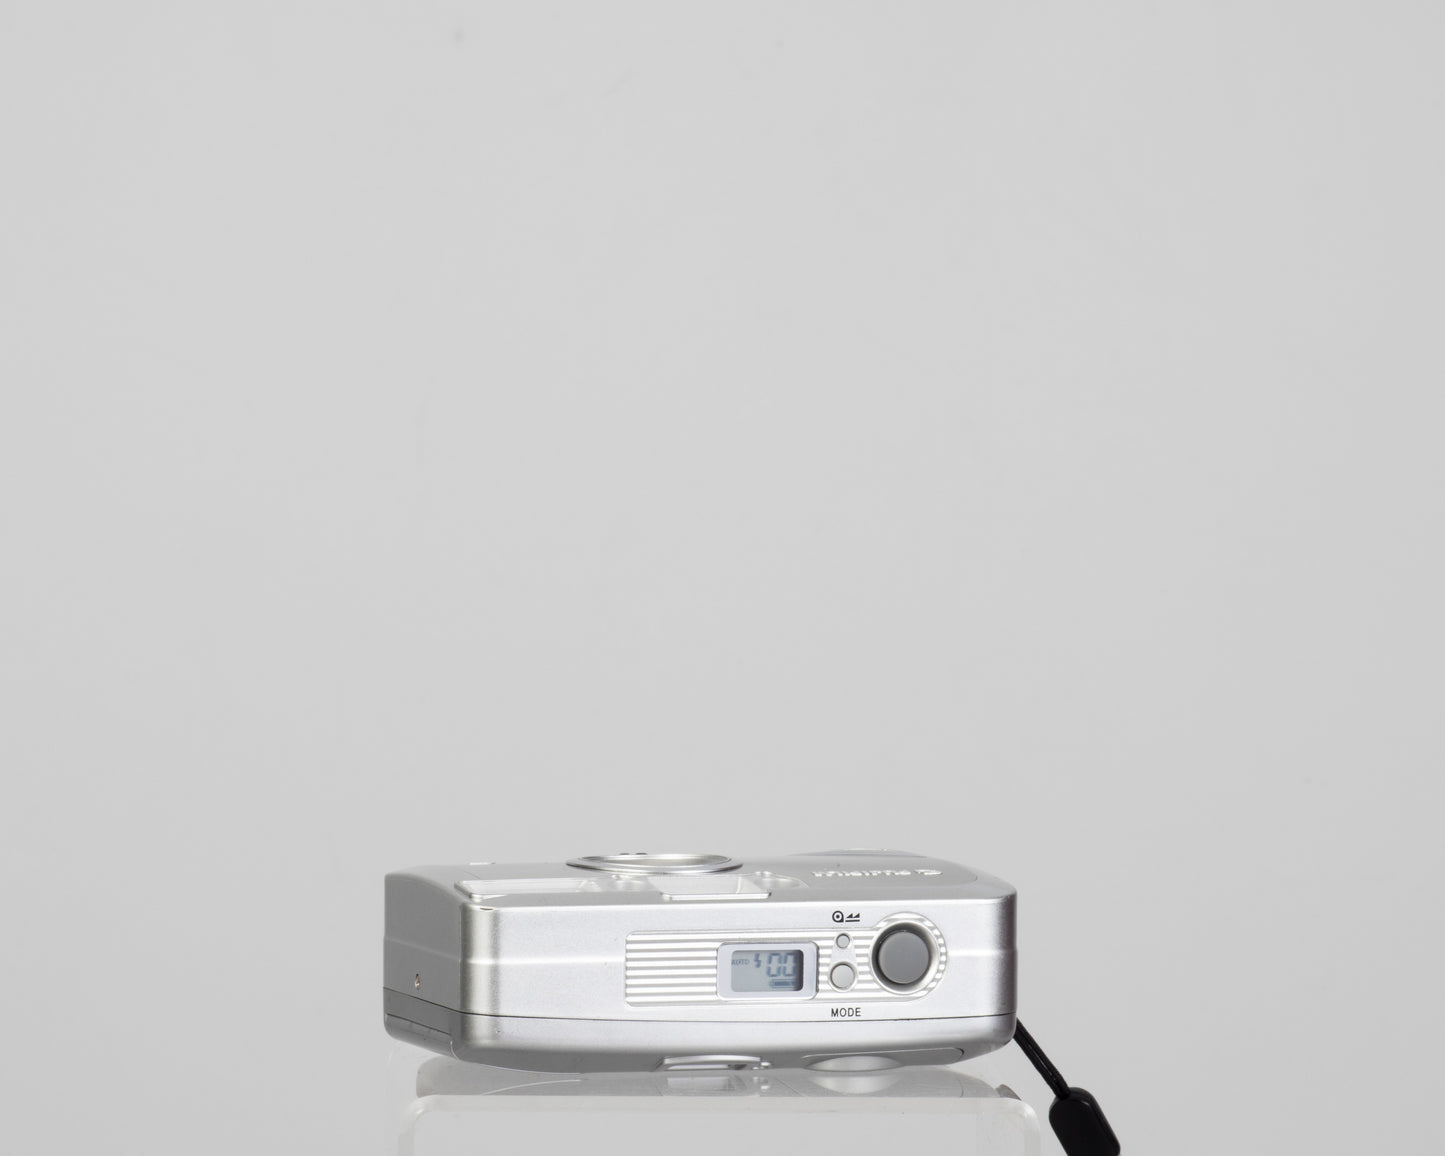 The Fujifilm Clear Shot S Autofocus ultracompact 35mm film camera